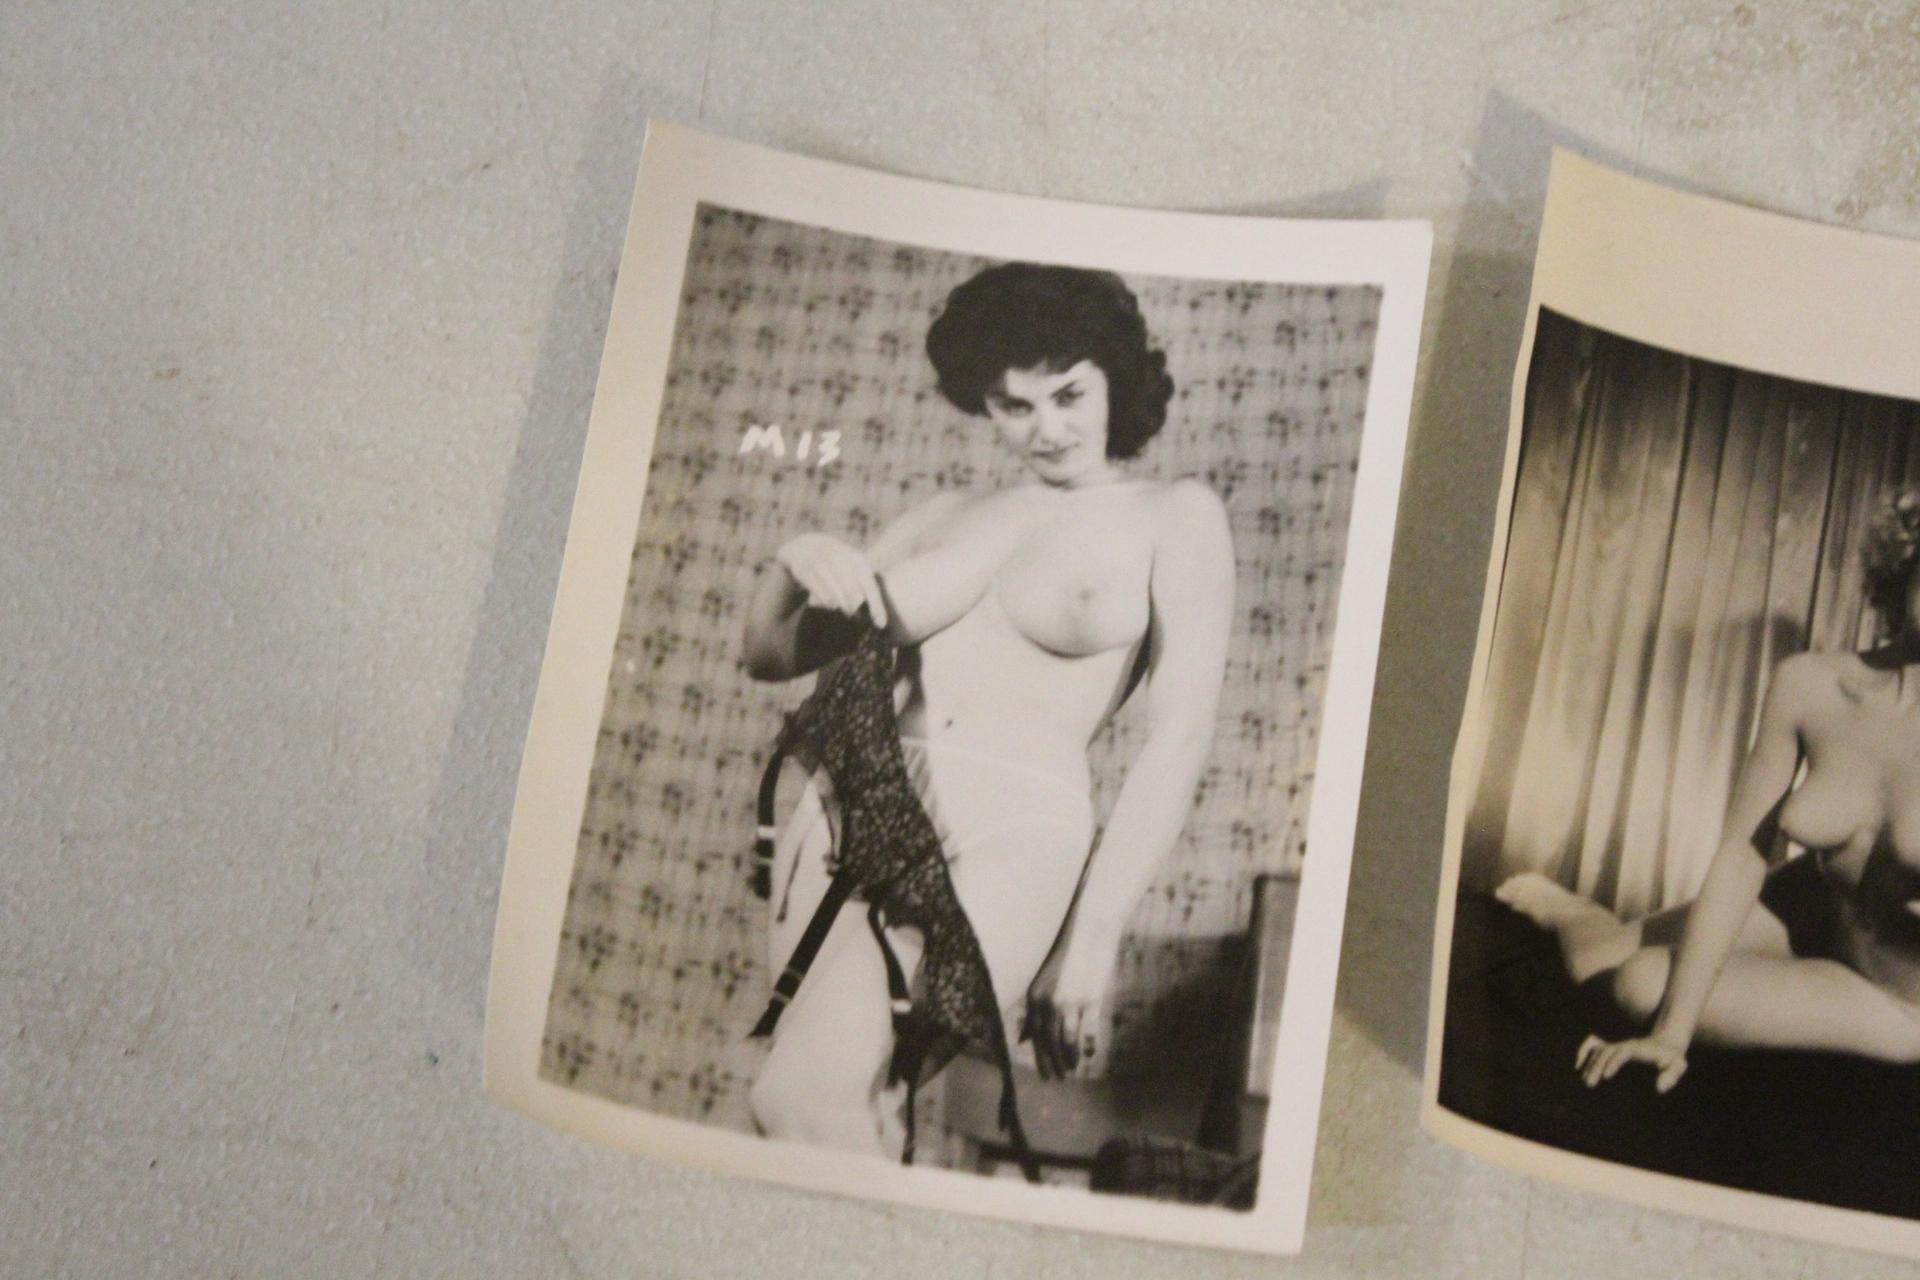 5 Real Nude Photos 4" x 5" Vintage